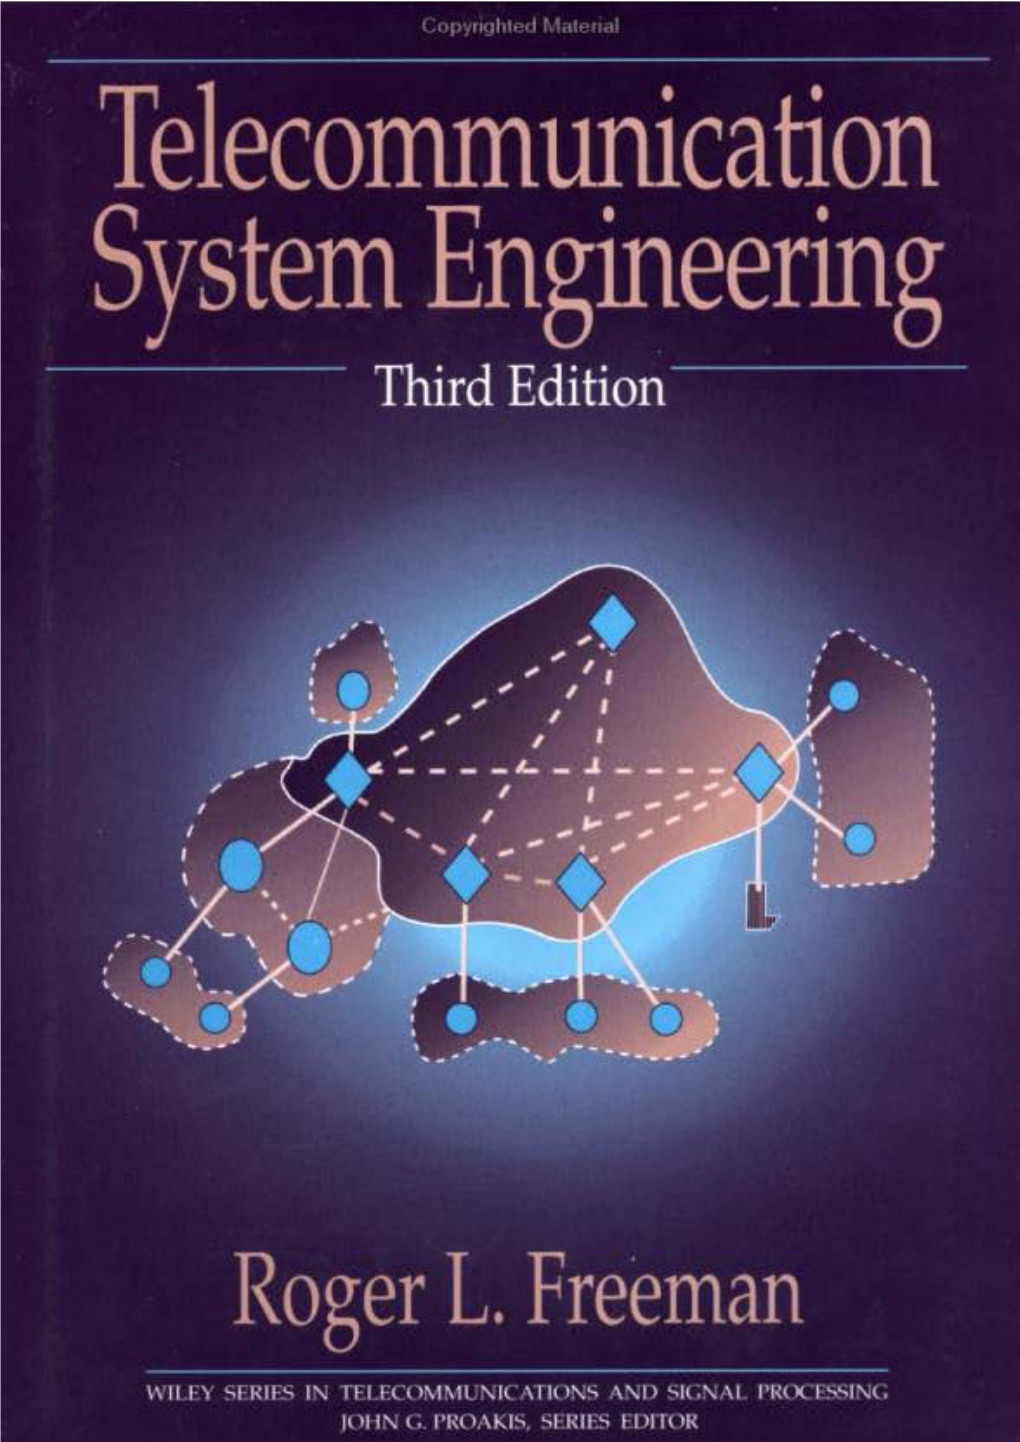 Telecommunication System Engineering Fourth Edition